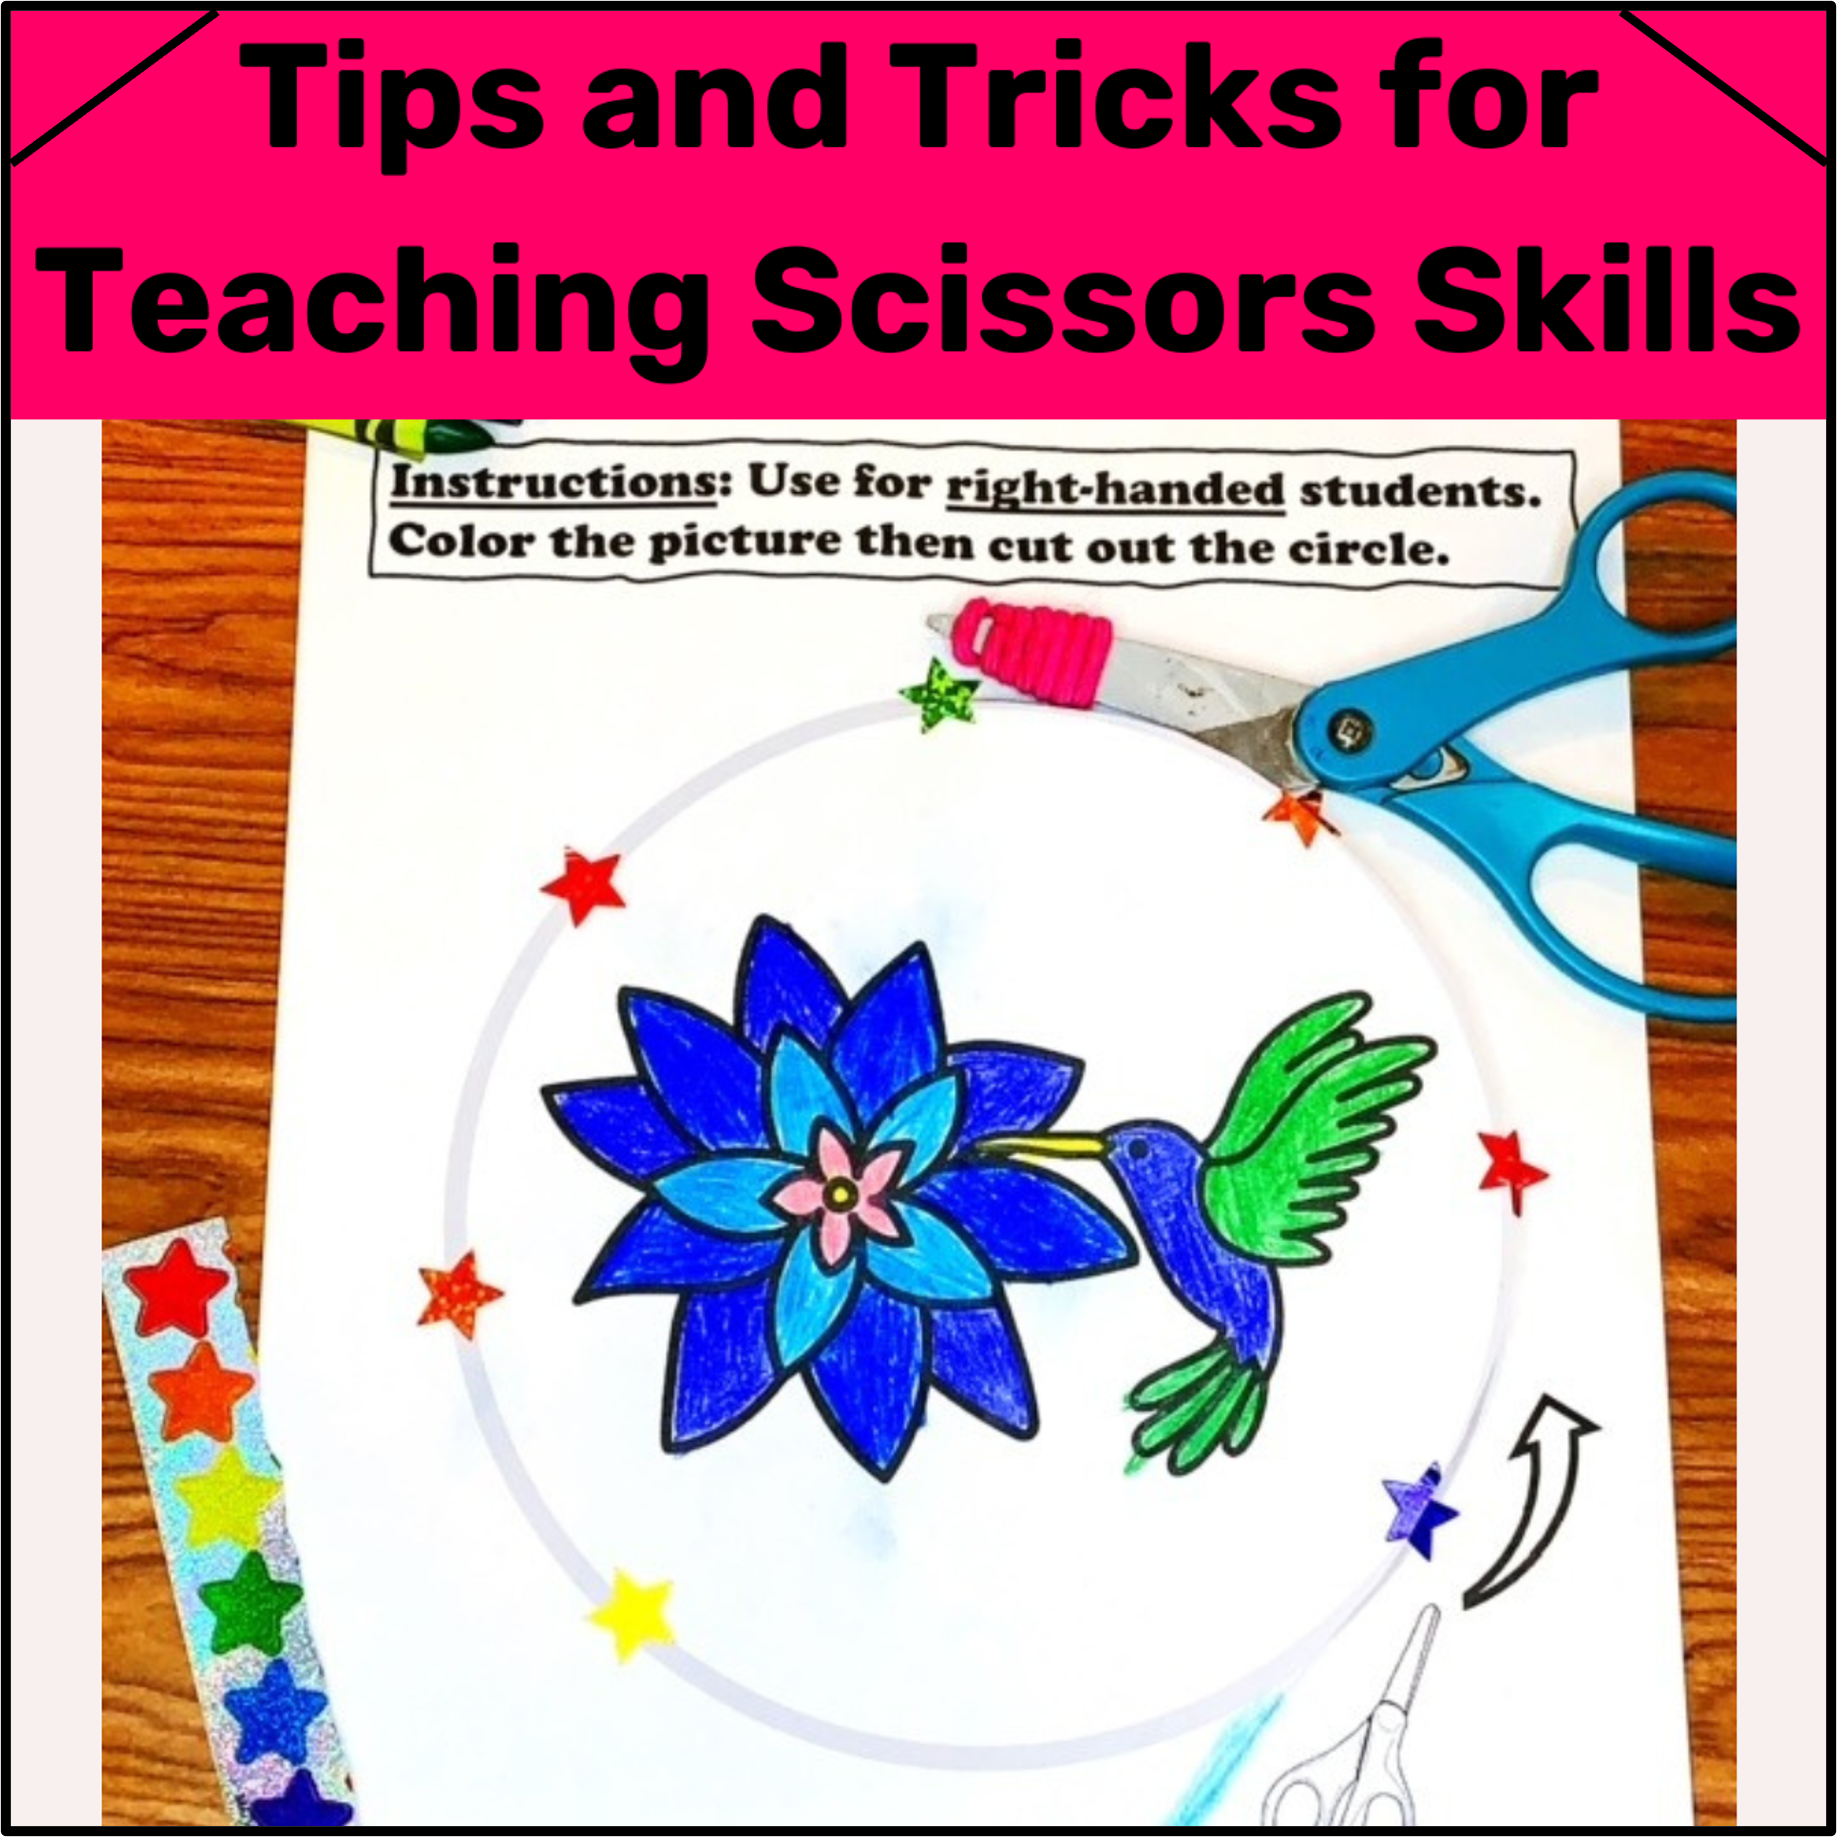 https://missjennyot.com/wp-content/uploads/2022/09/tips-and-tricks-scissor-skills.png